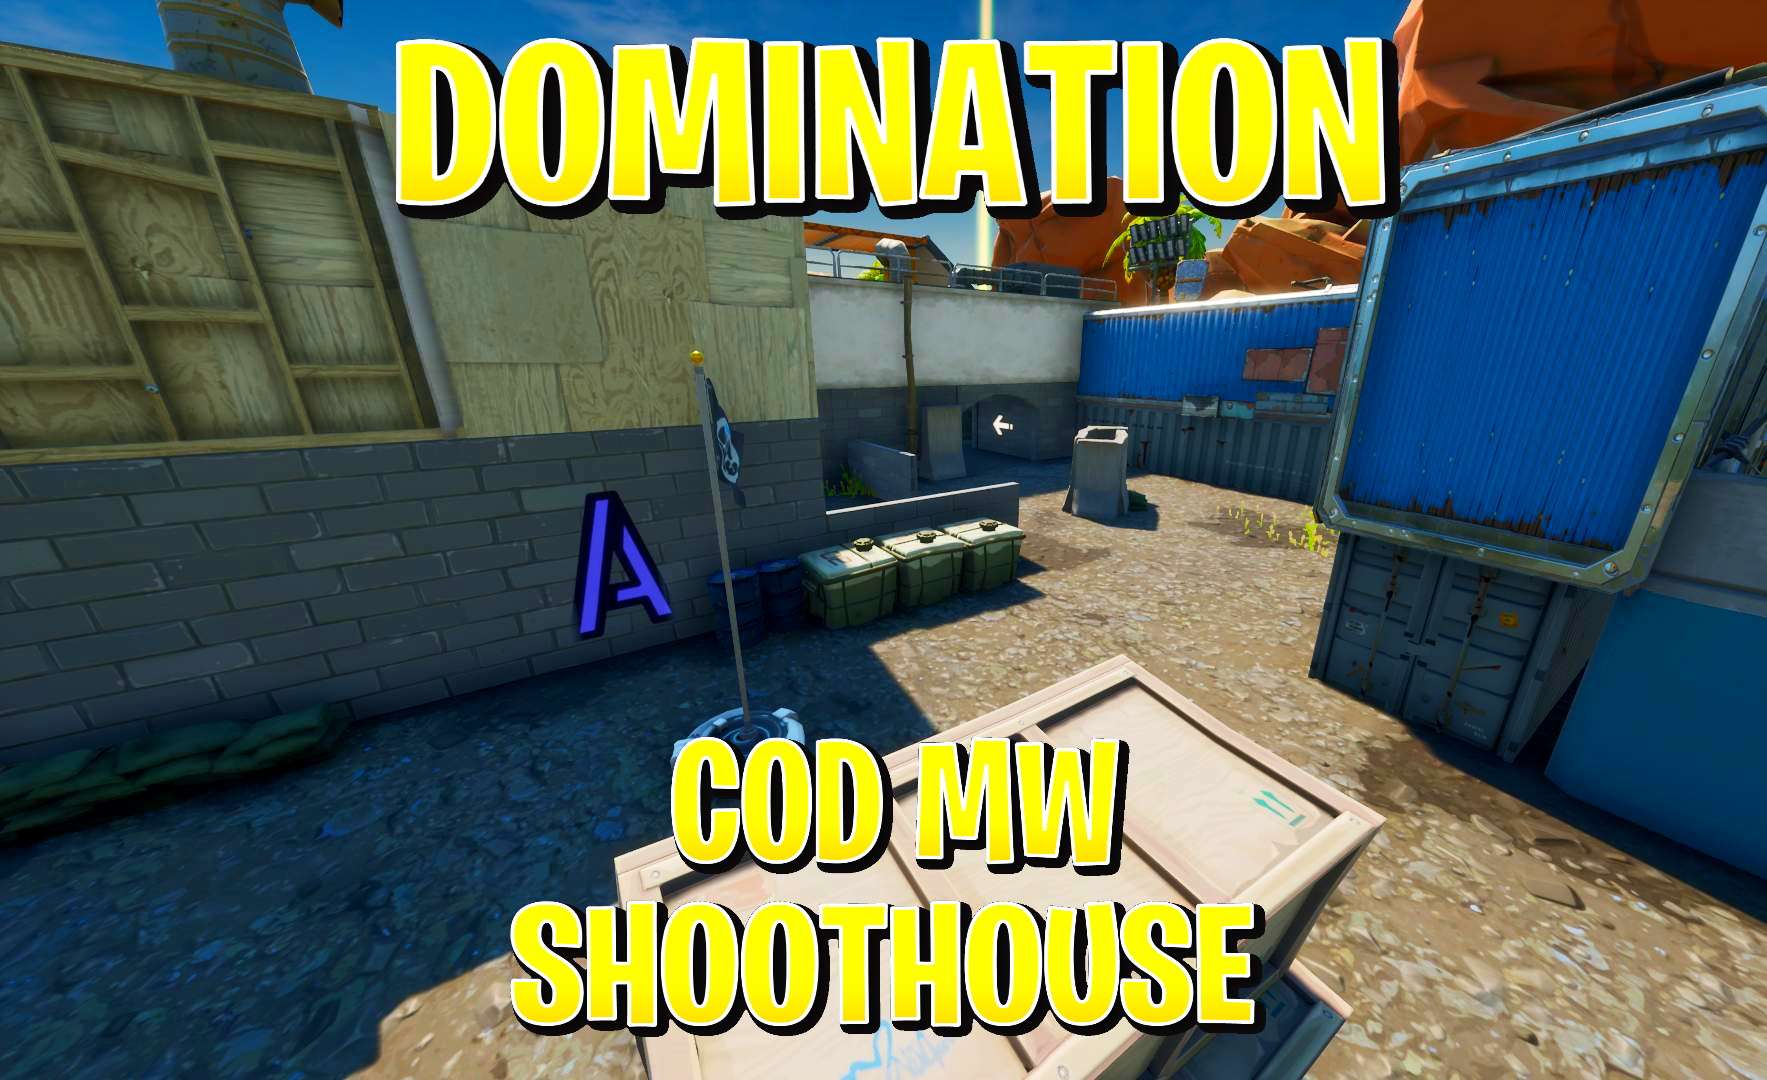 Domination Shoot House Cod Mw Fortnite Creative Map Codes